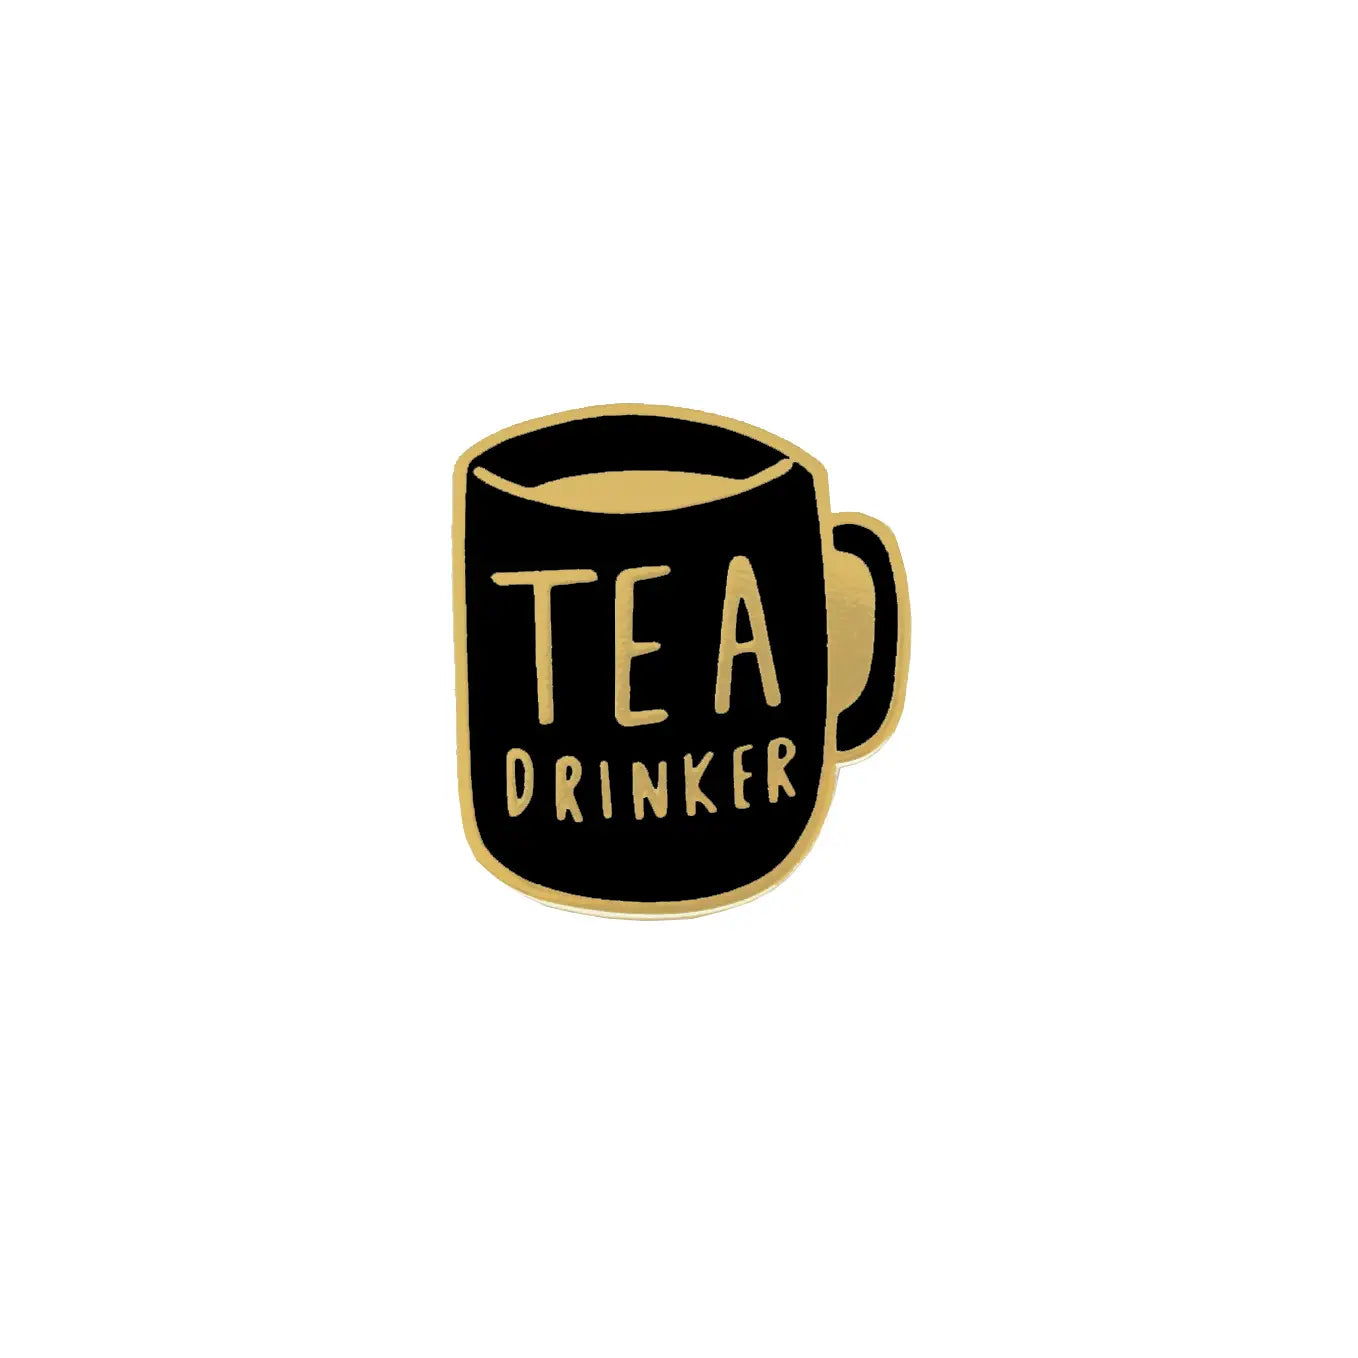 Tea Drinker pin